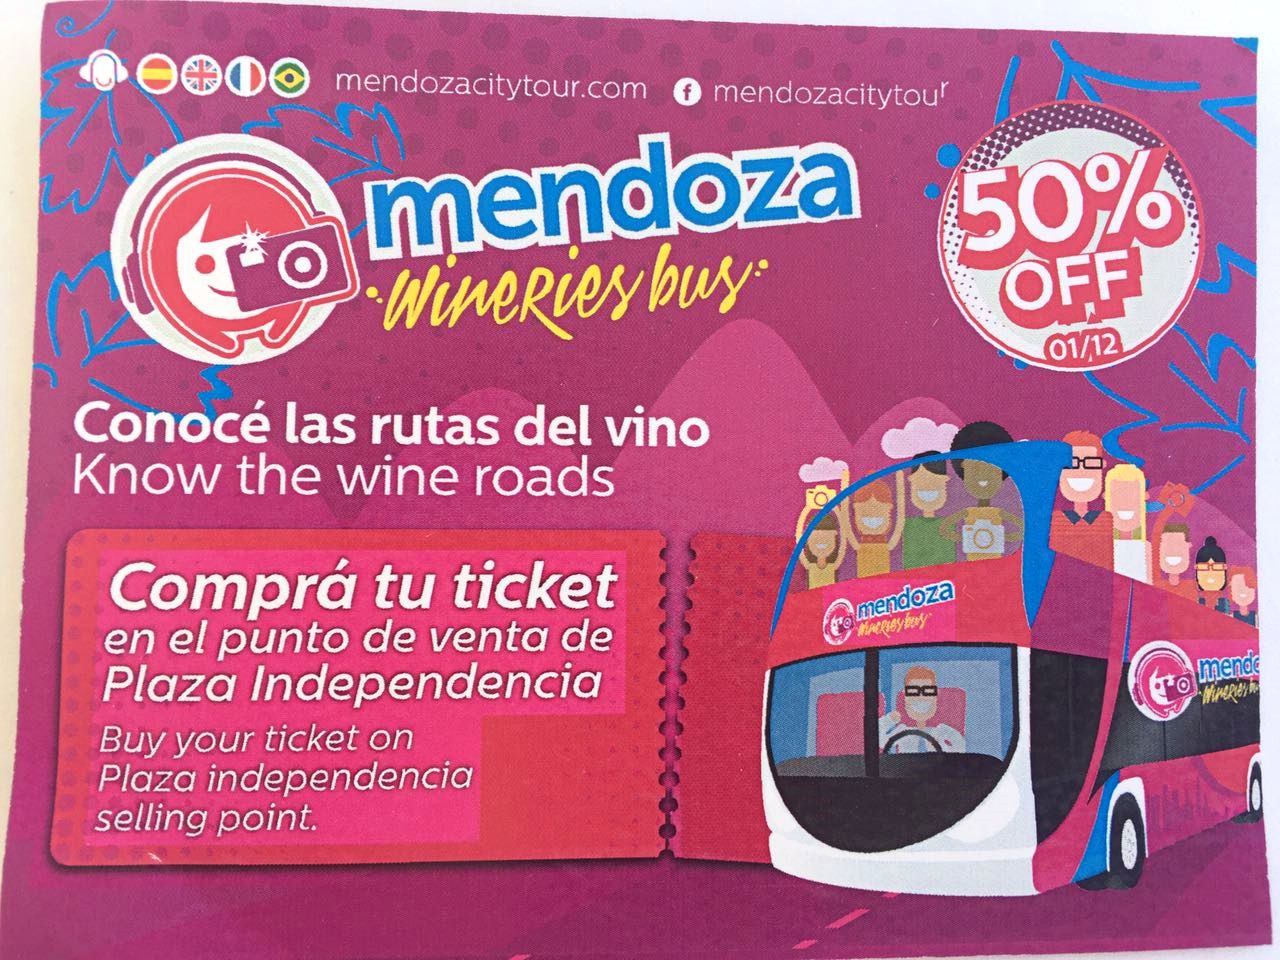 mendoza-wineriesbus